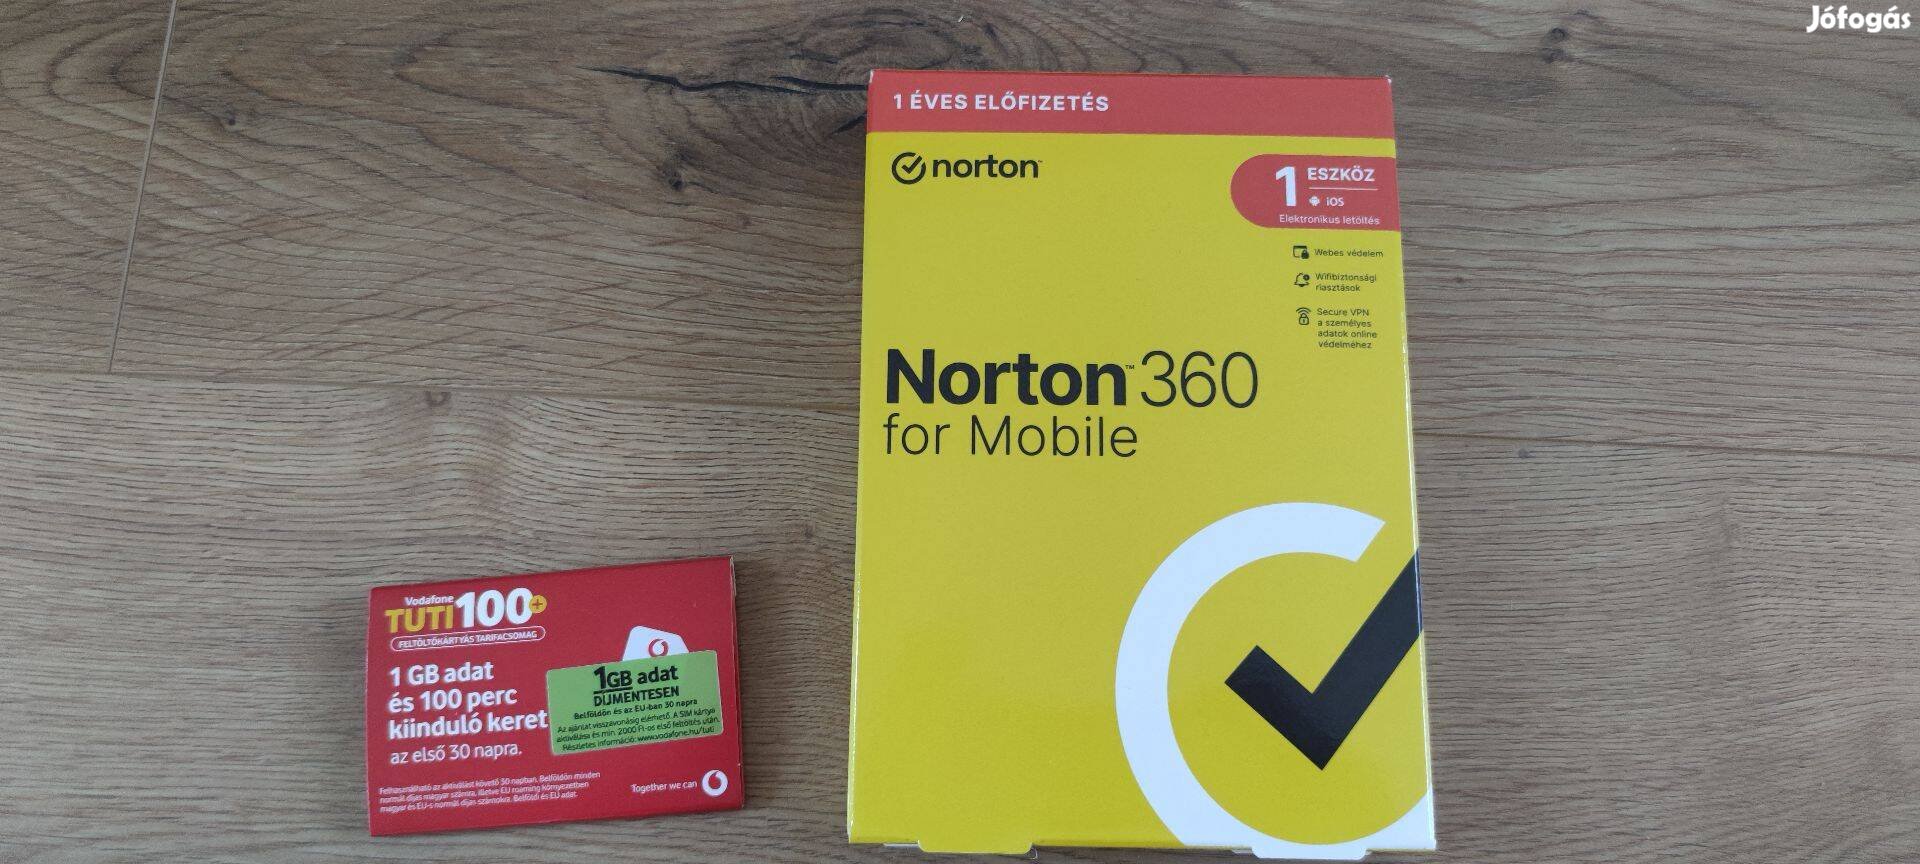 Norton 360 for Mobile HUN 1 éves dobozos + Tuti 100 Smart SIM